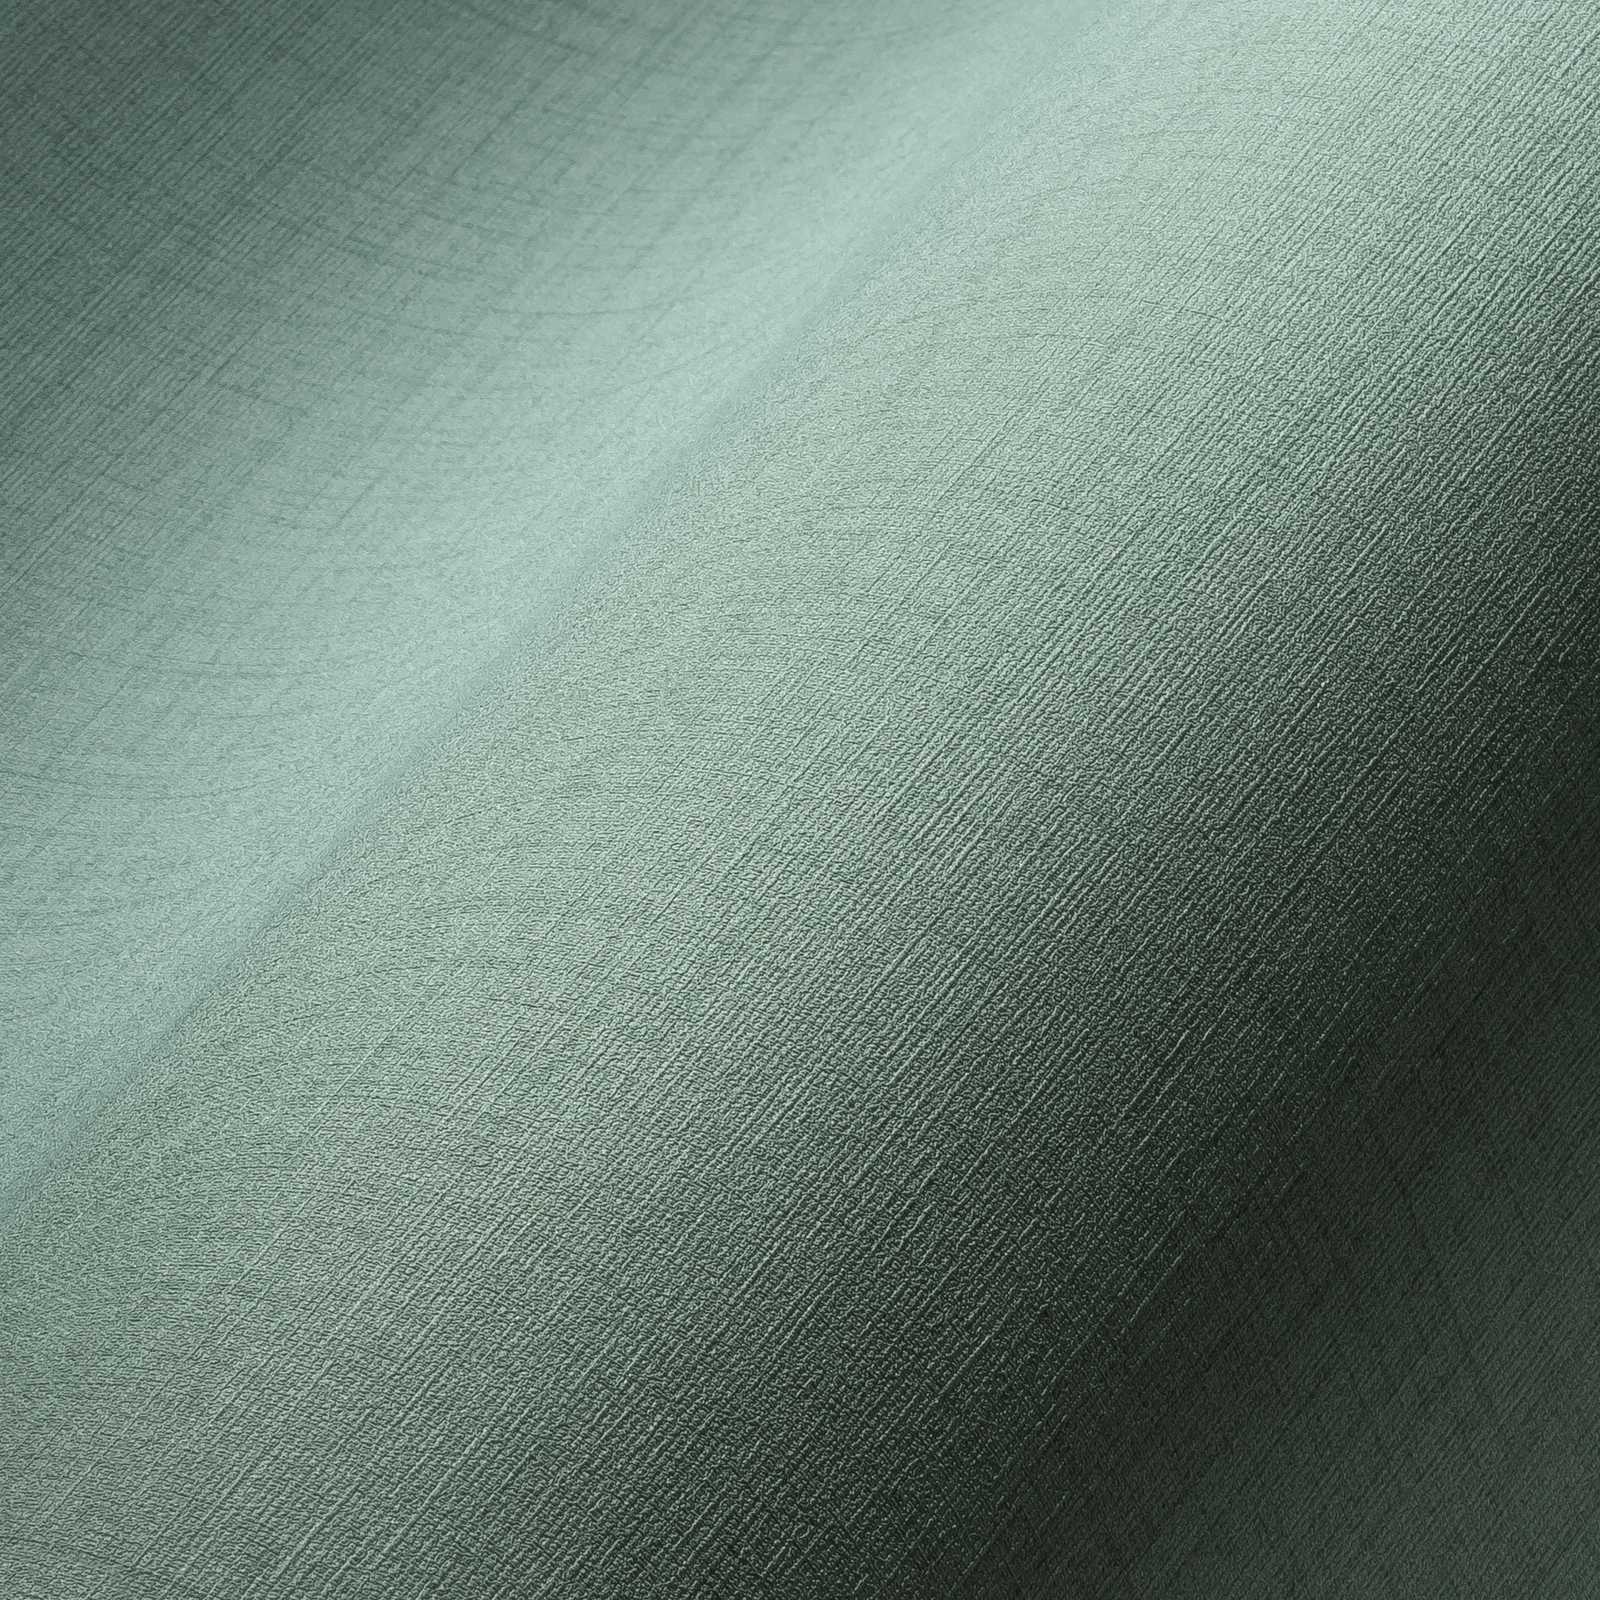             Wallpaper sage green with linen look & texture effect - green
        